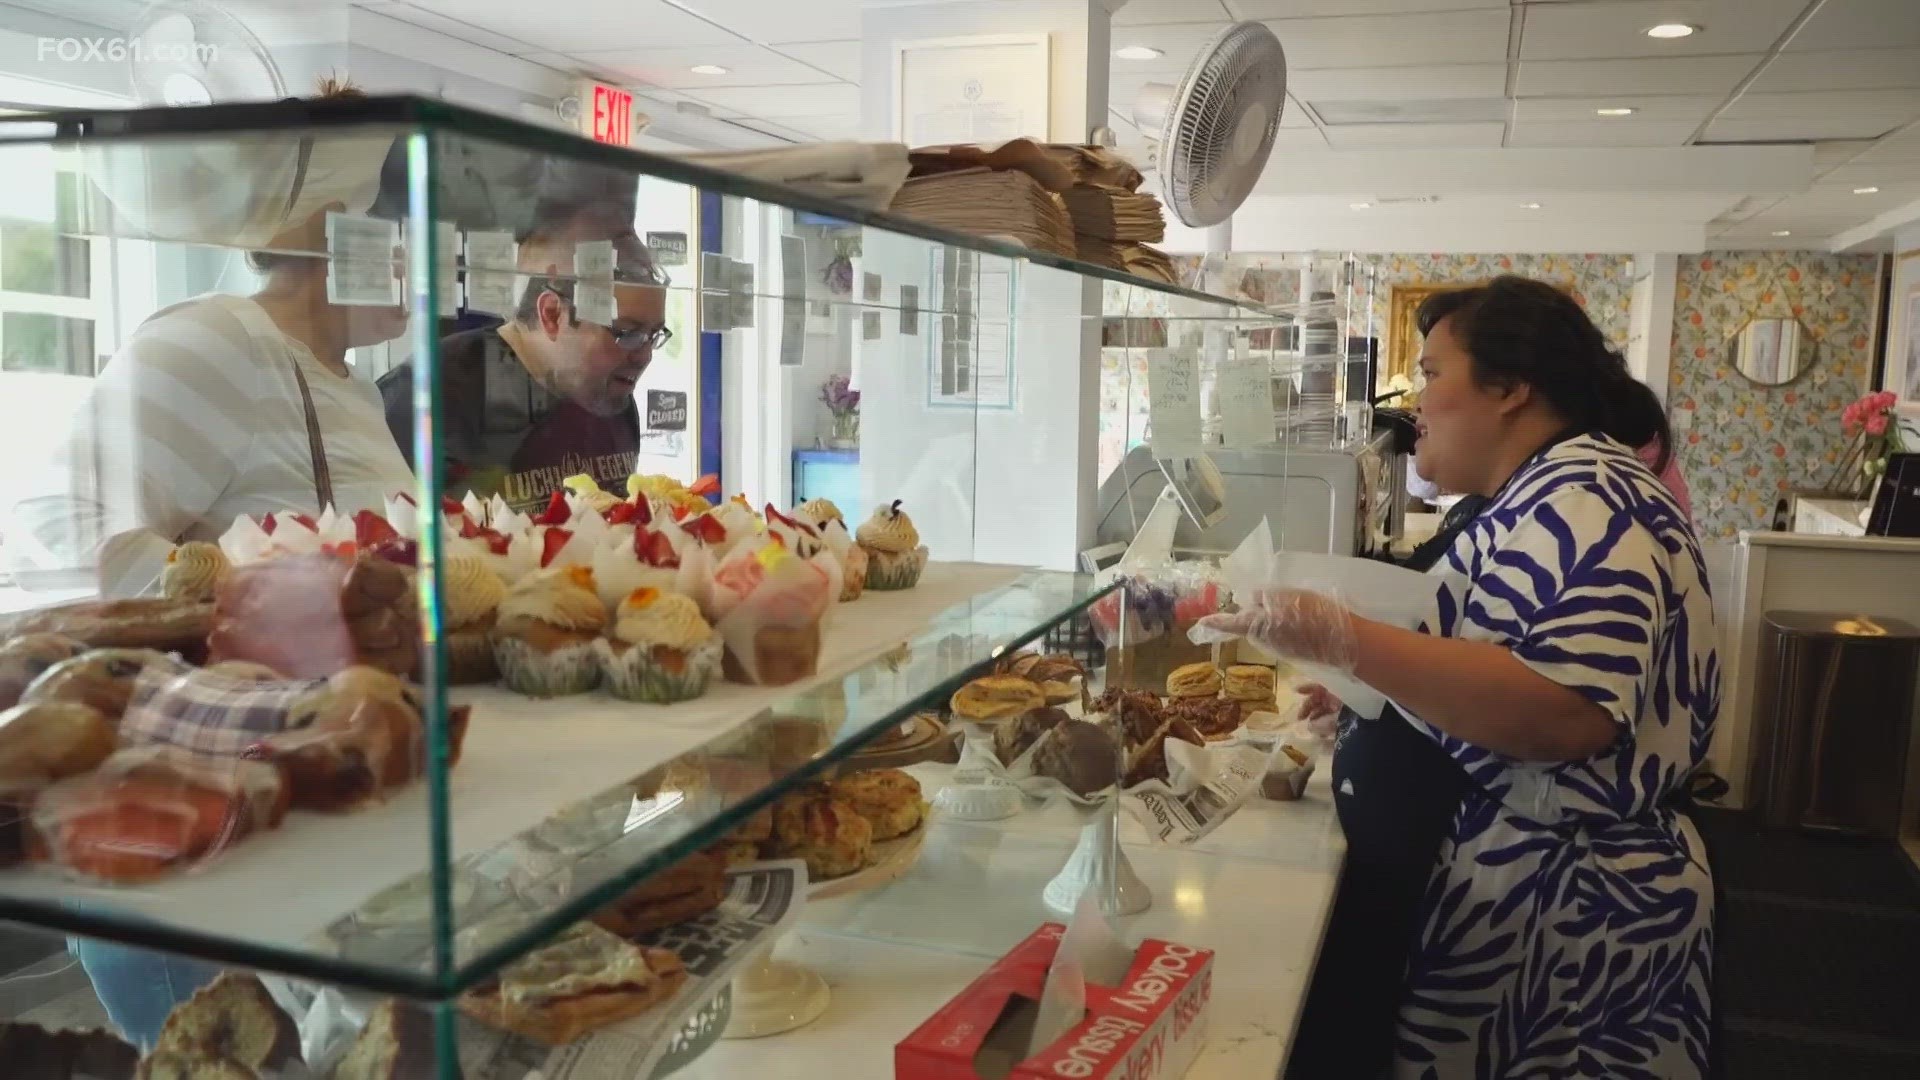 FOX61's Carmen Chau goes on a AAPI food tour in Connecticut.